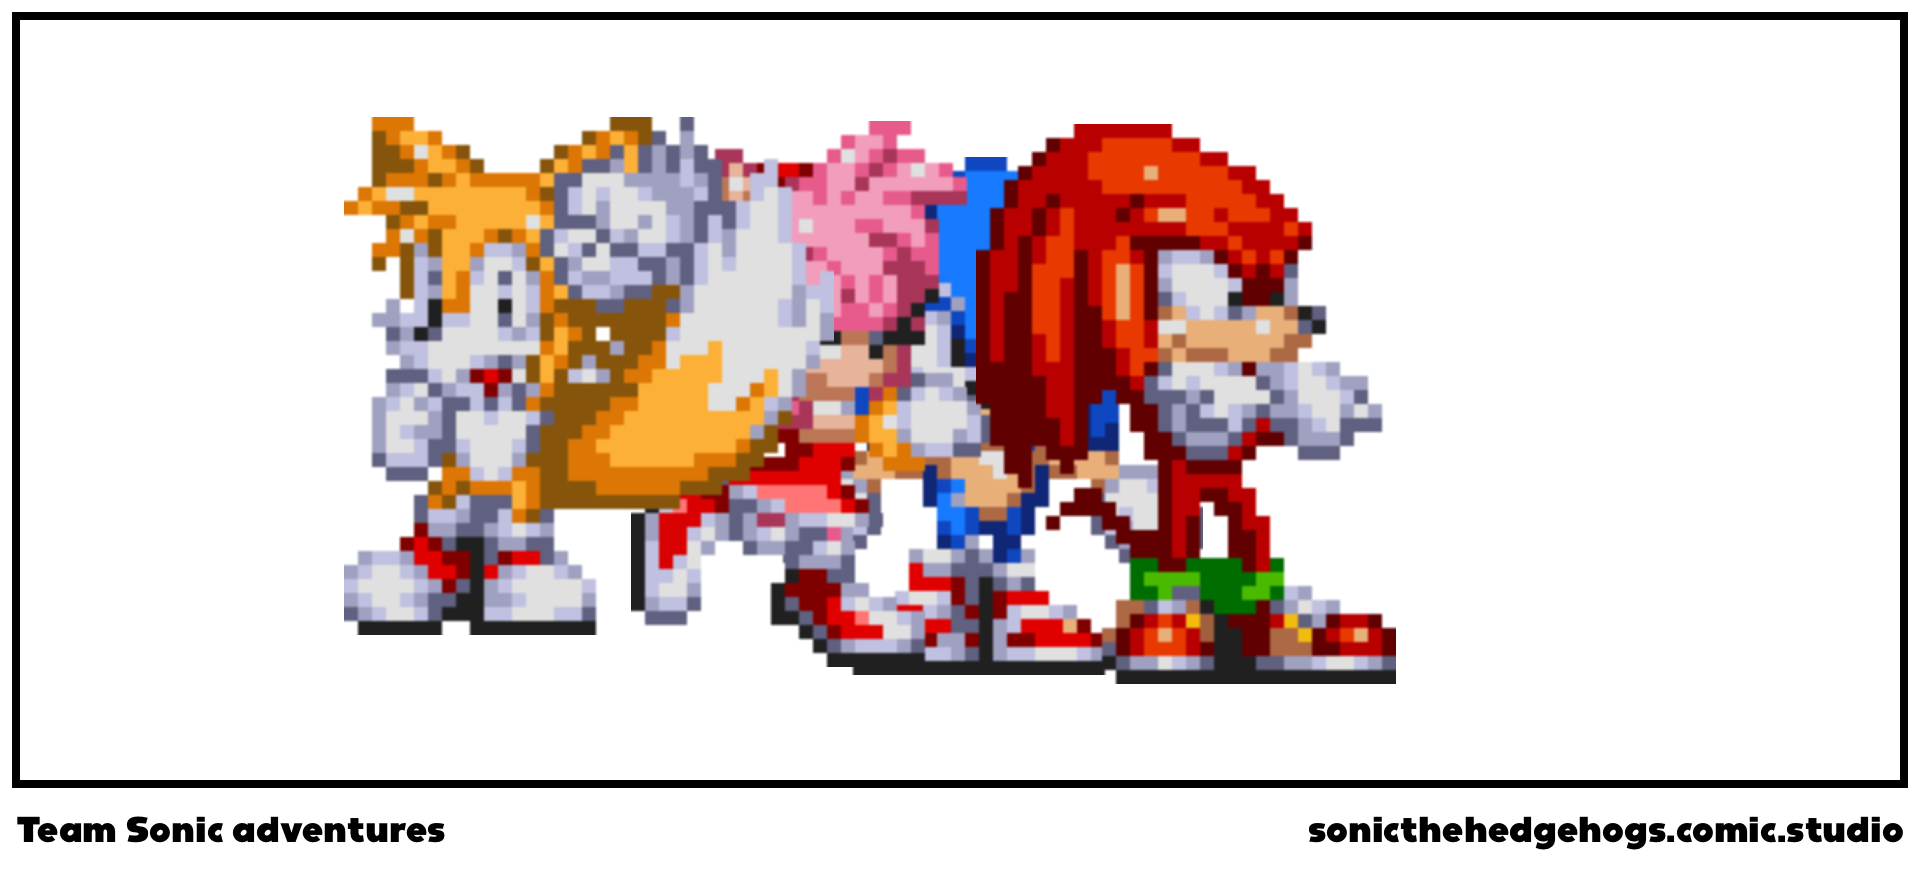 Team Sonic adventures